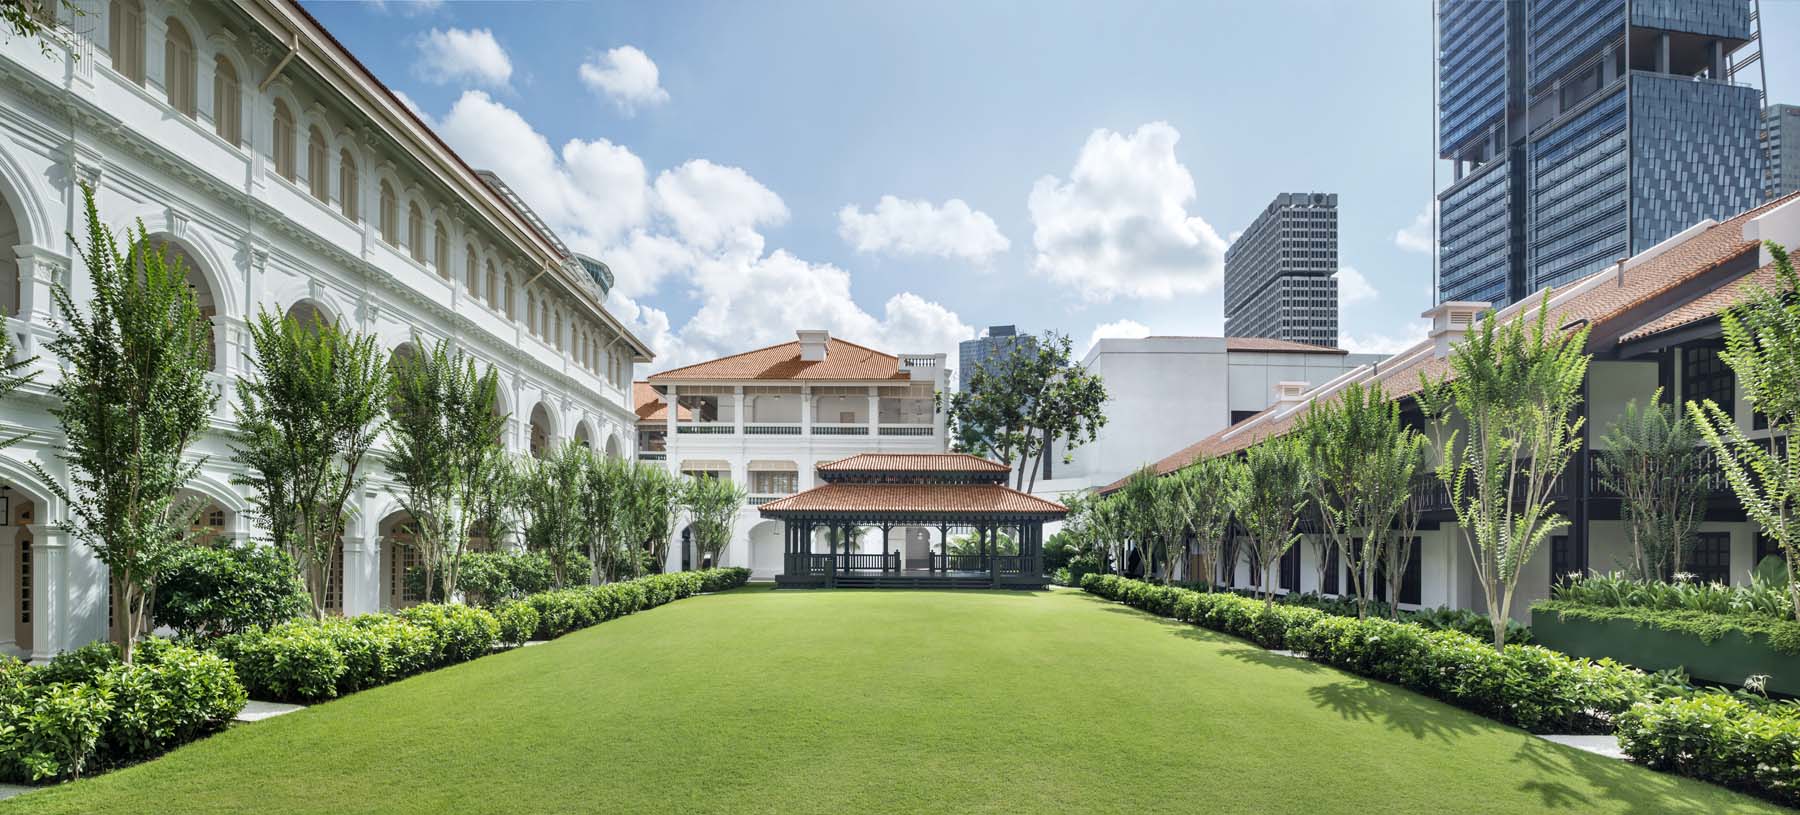 Raffles Singapore - The Lawn